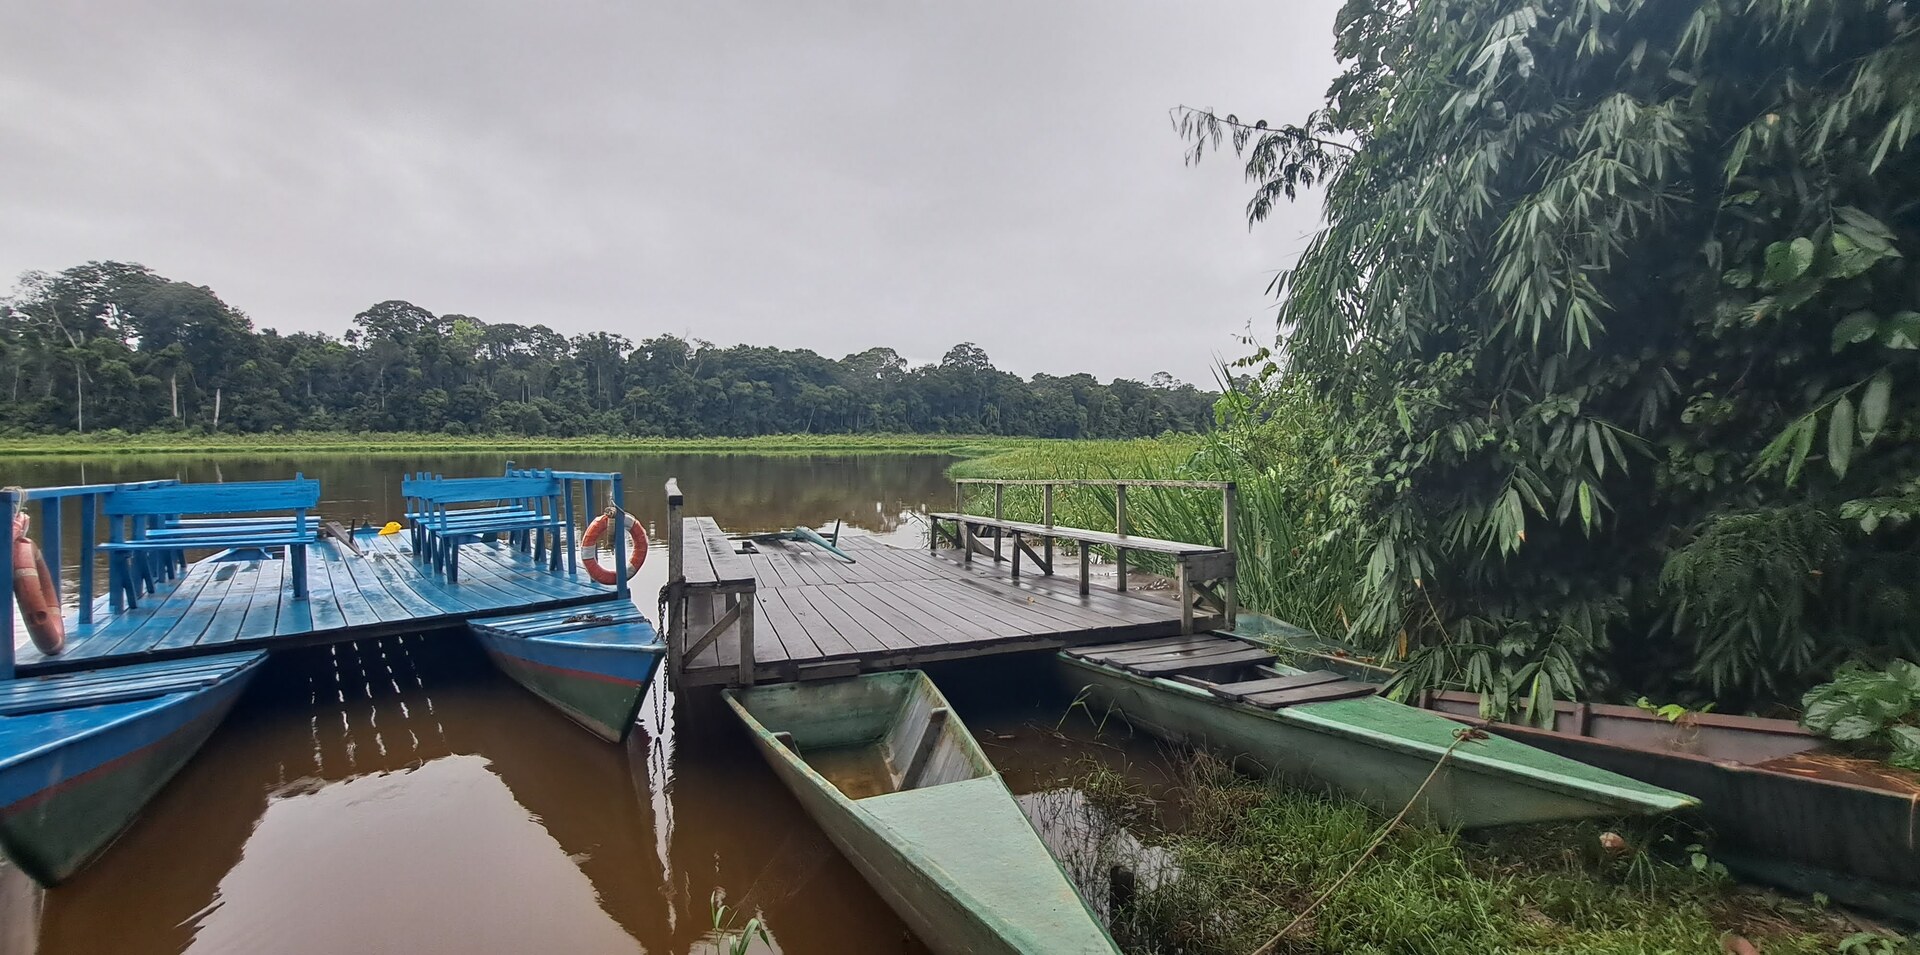 Small boat dock in the Peruvian Rainforest